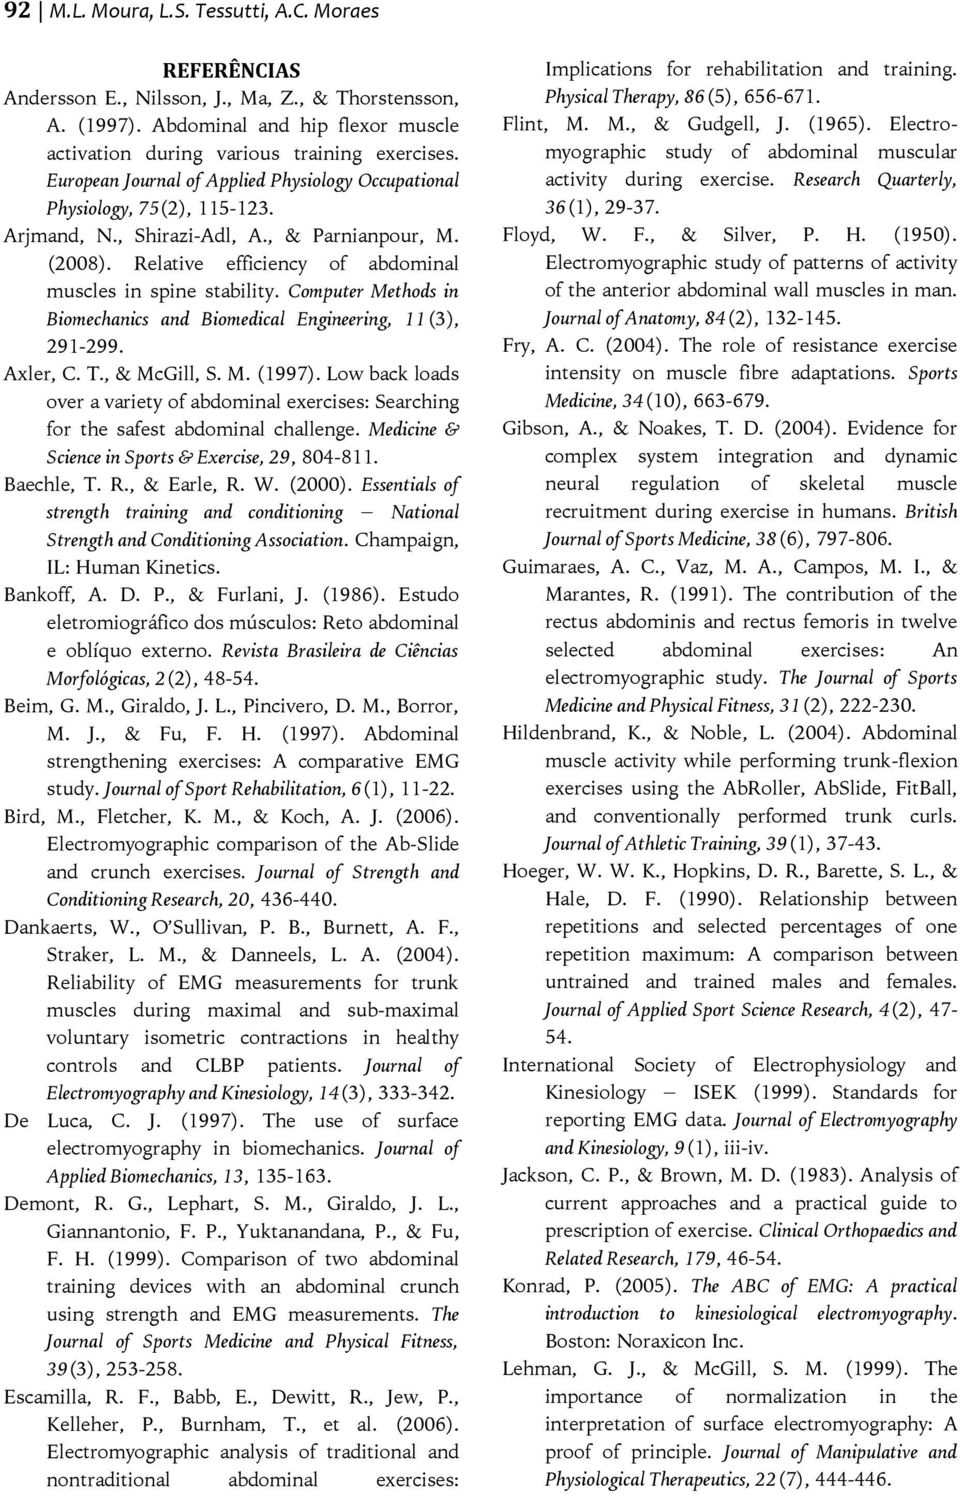 Computer Methods in Biomechanics and Biomedical Engineering, 11(3), 291-299. Axler, C. T., & McGill, S. M. (1997).